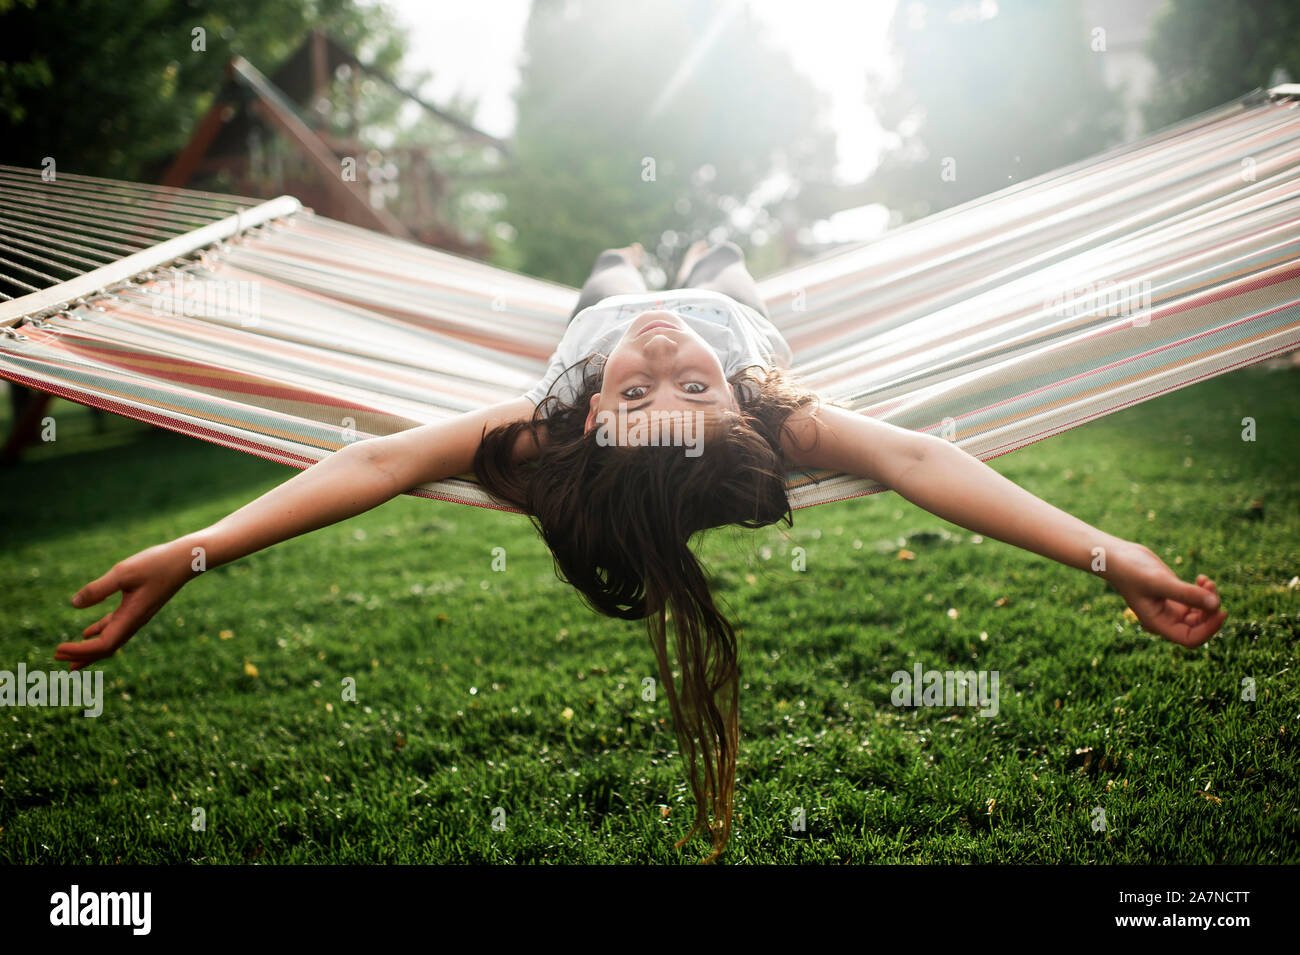 Tween girl taking a break while swinging in hammock in backyard Stock Photo